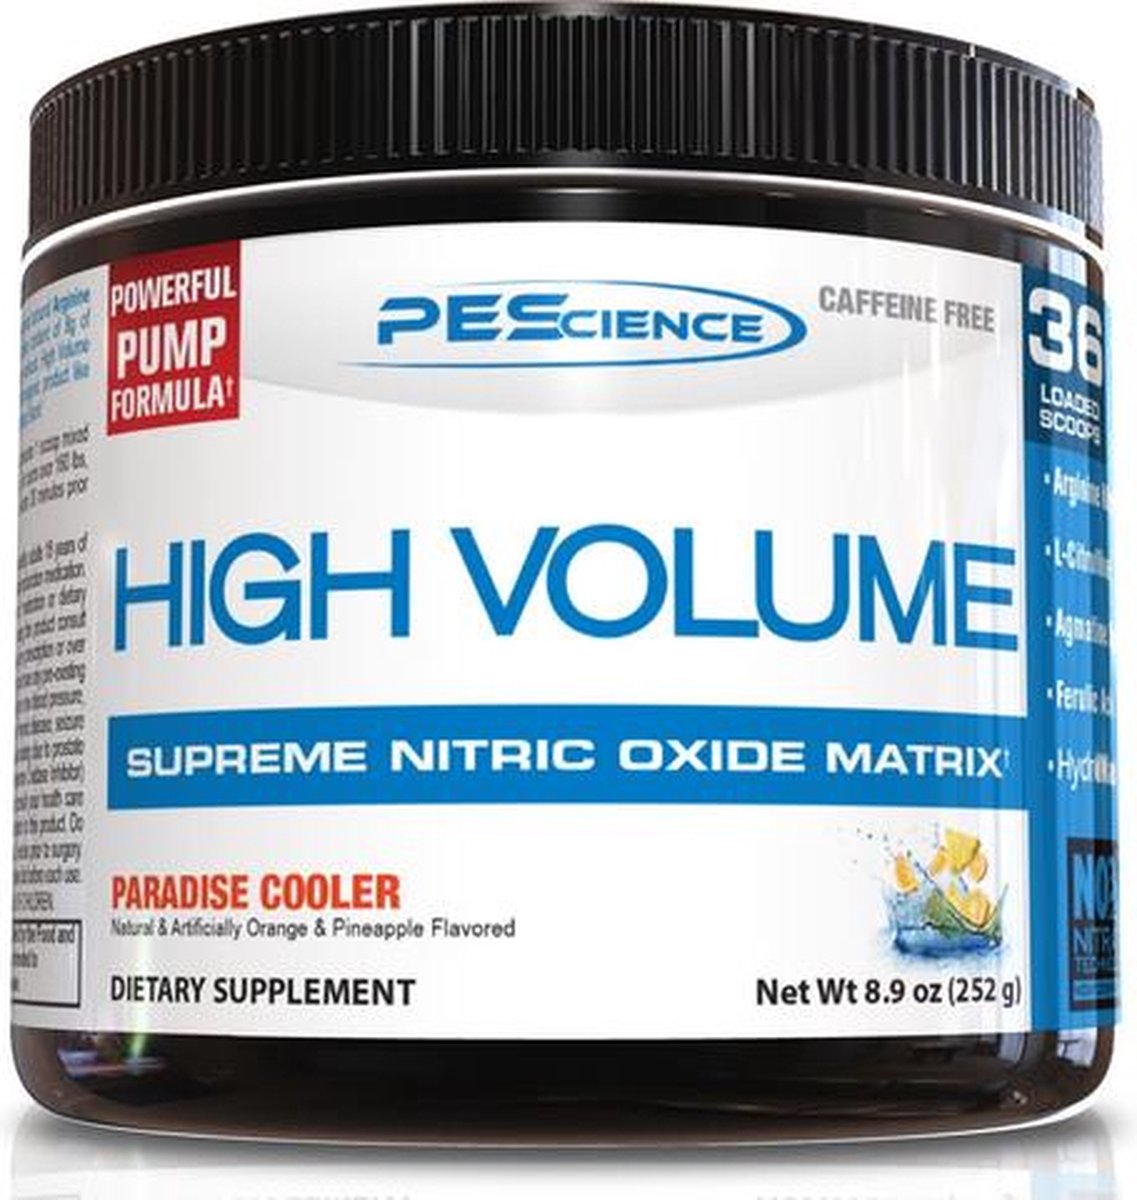 PEScience High Volume 252g — Paradise Cooler